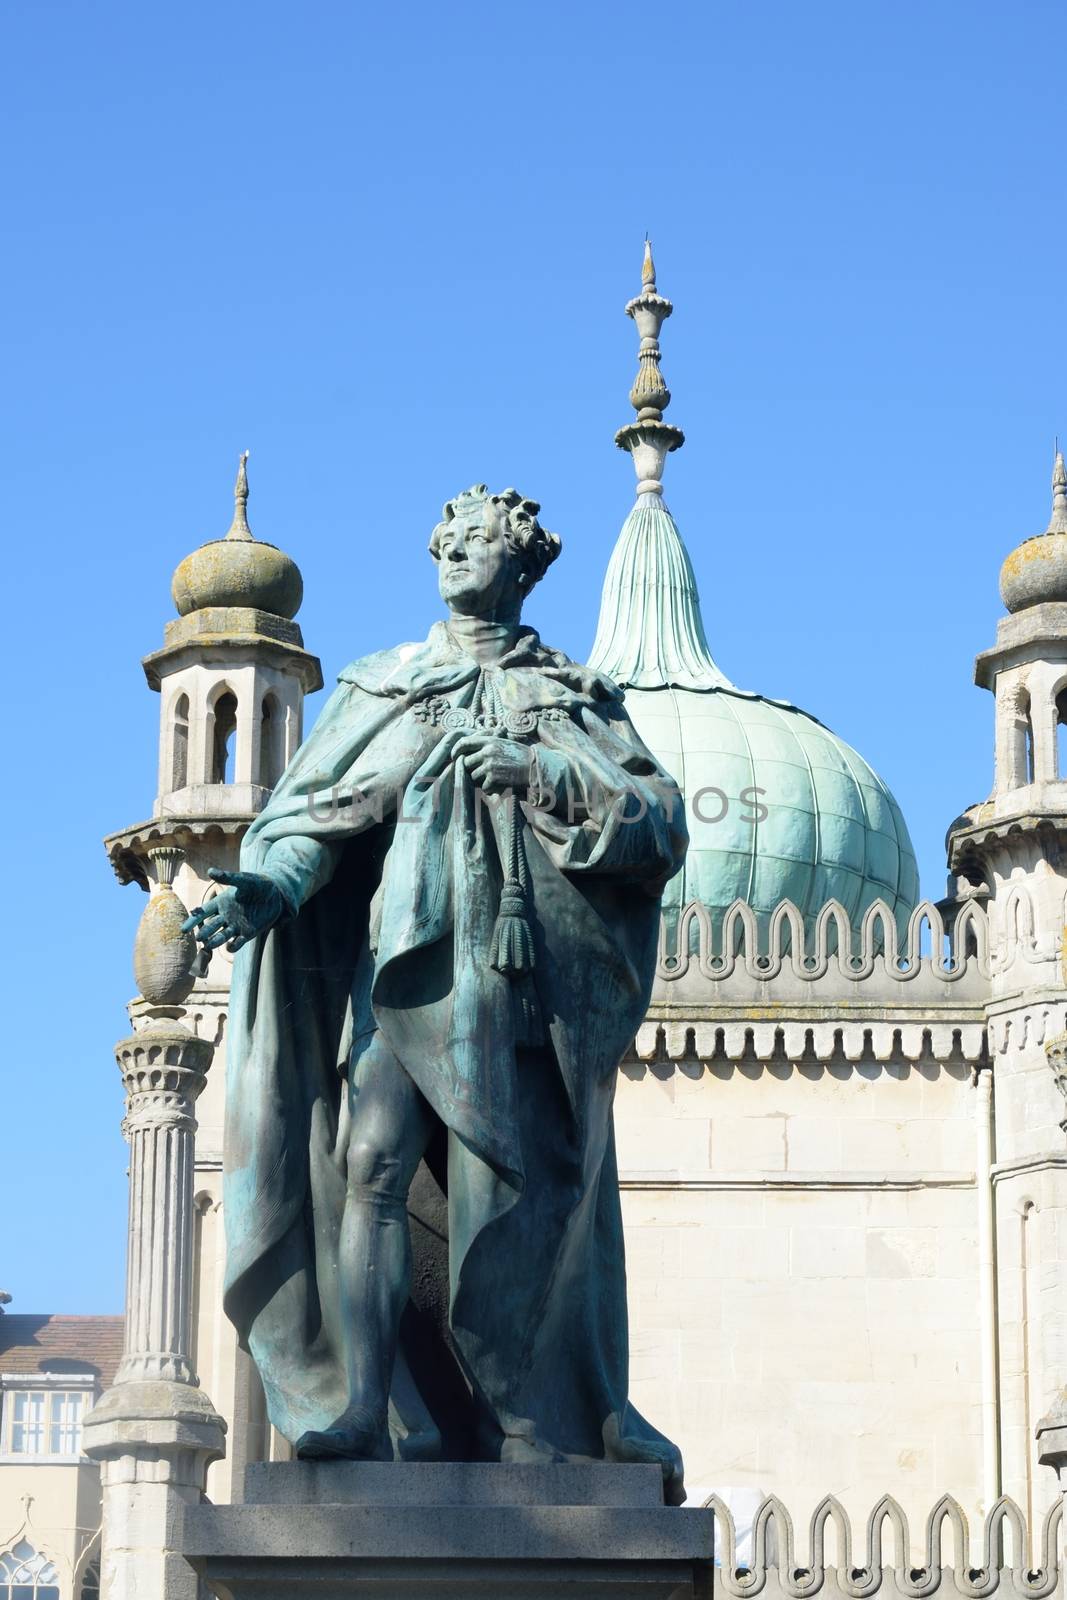 Statue of George IV  Brighton Pavillion by pauws99